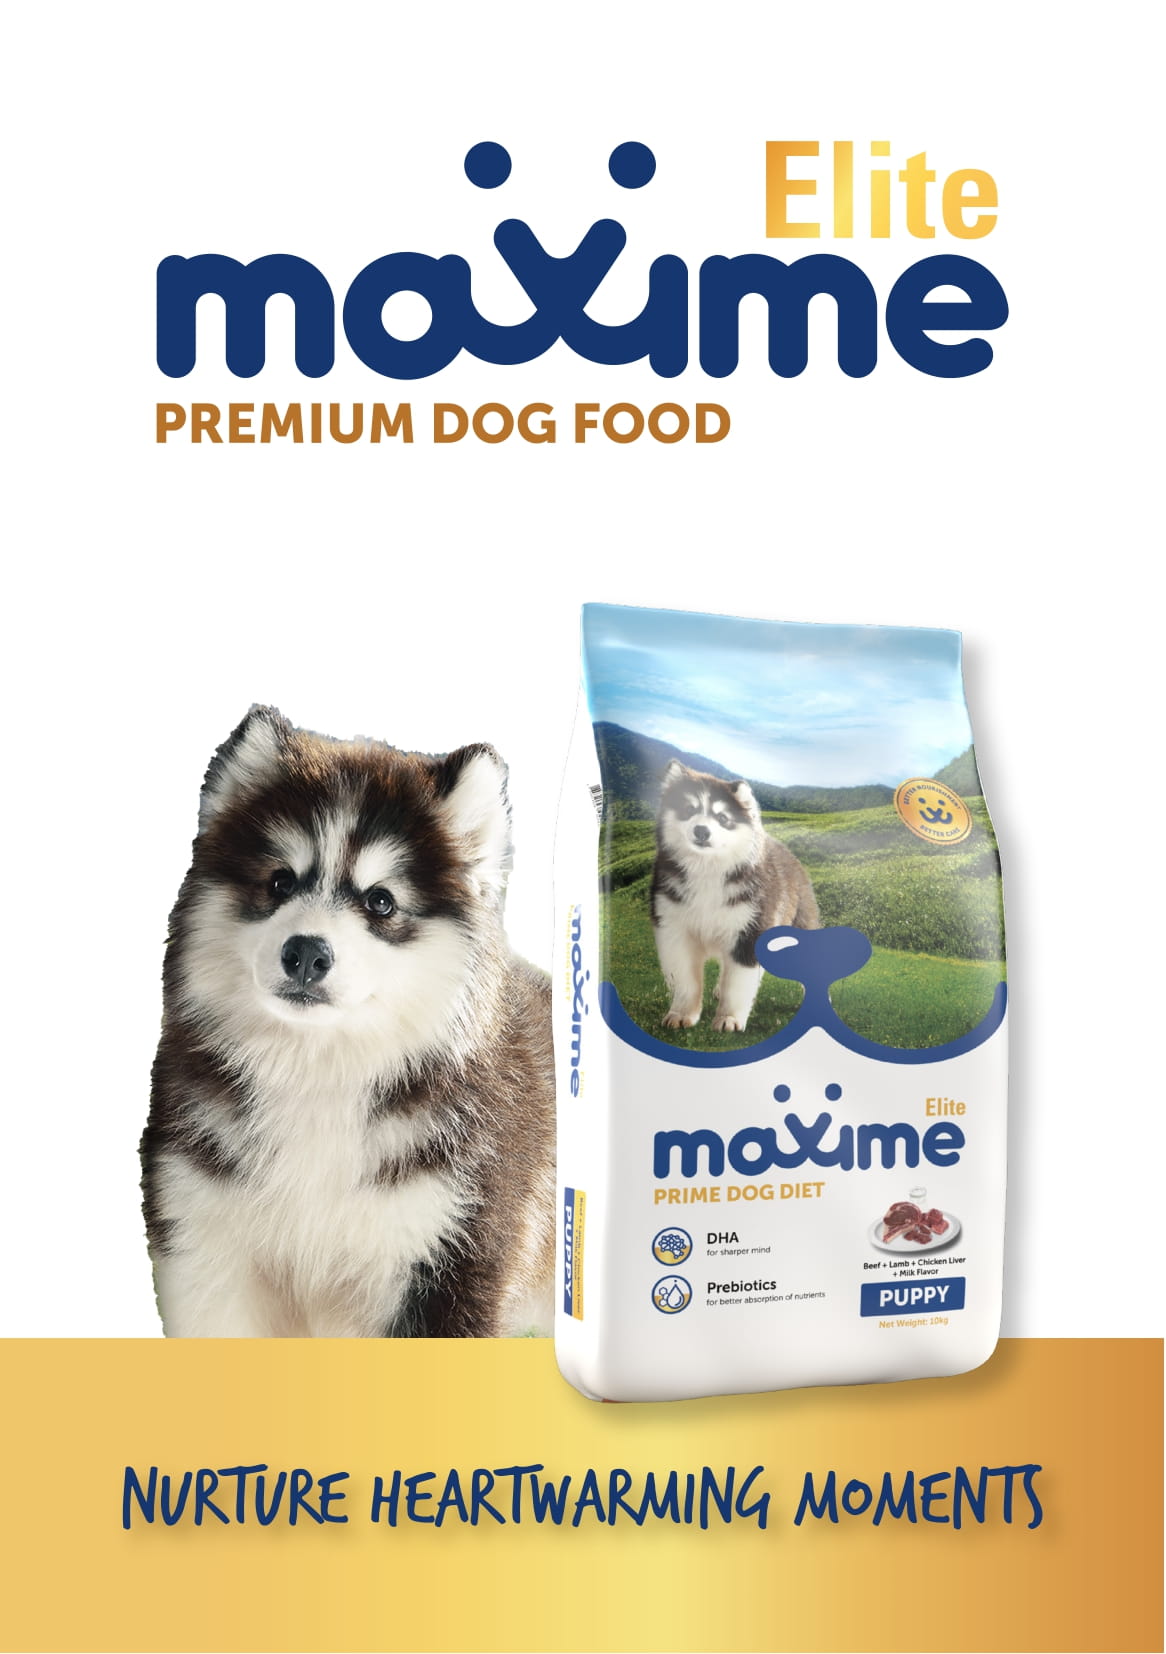 Maxime Elite Puppy Brochure